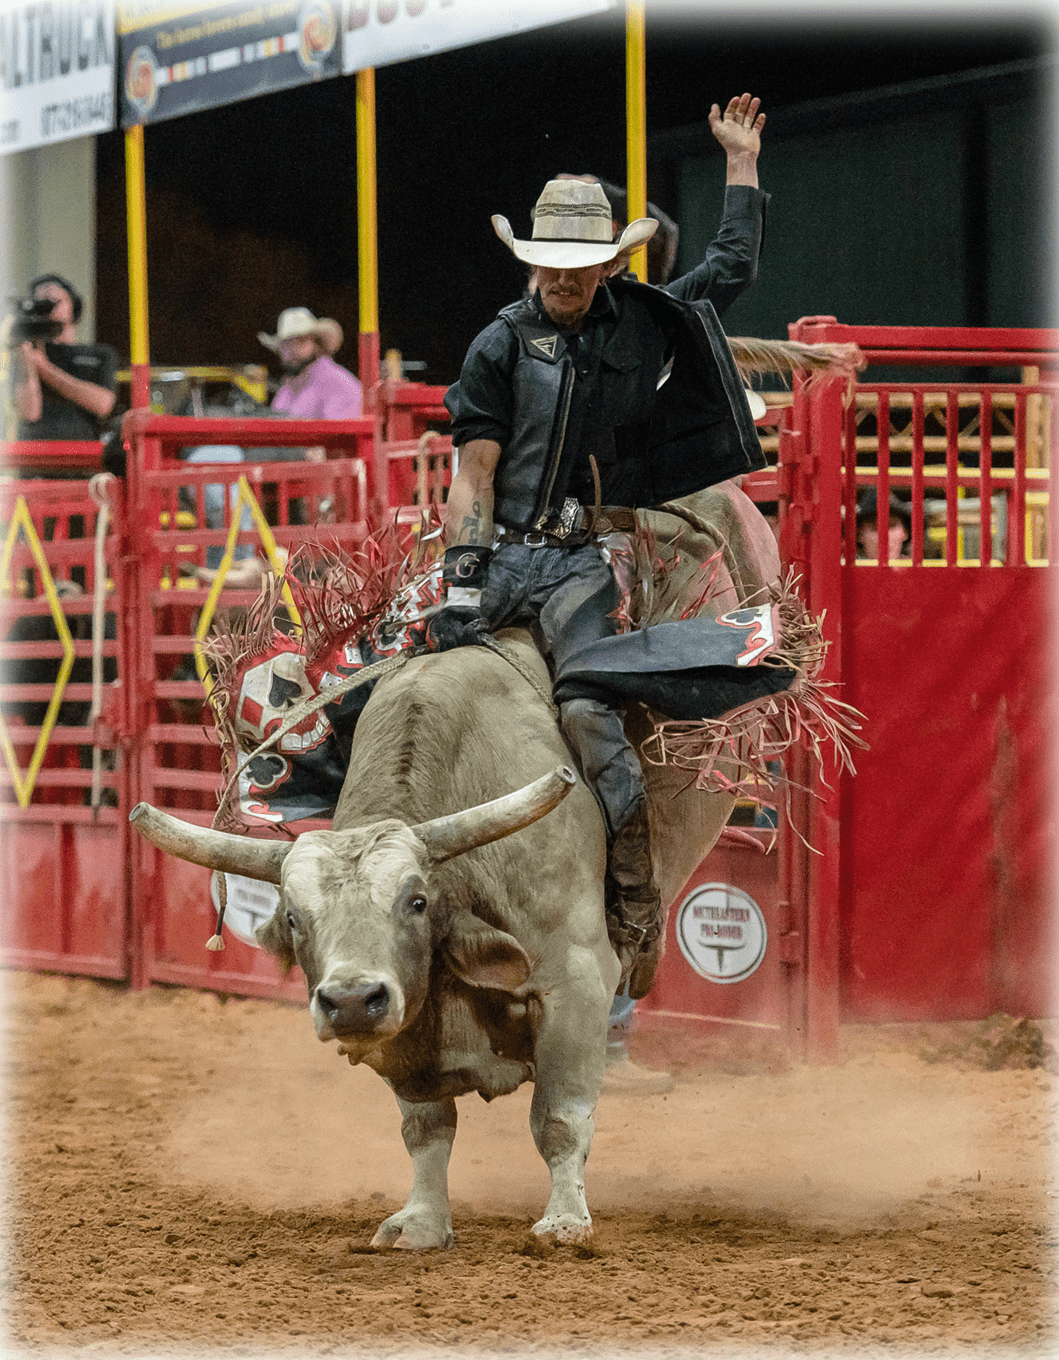 Southeastern Pro Rodeo Bull Riding